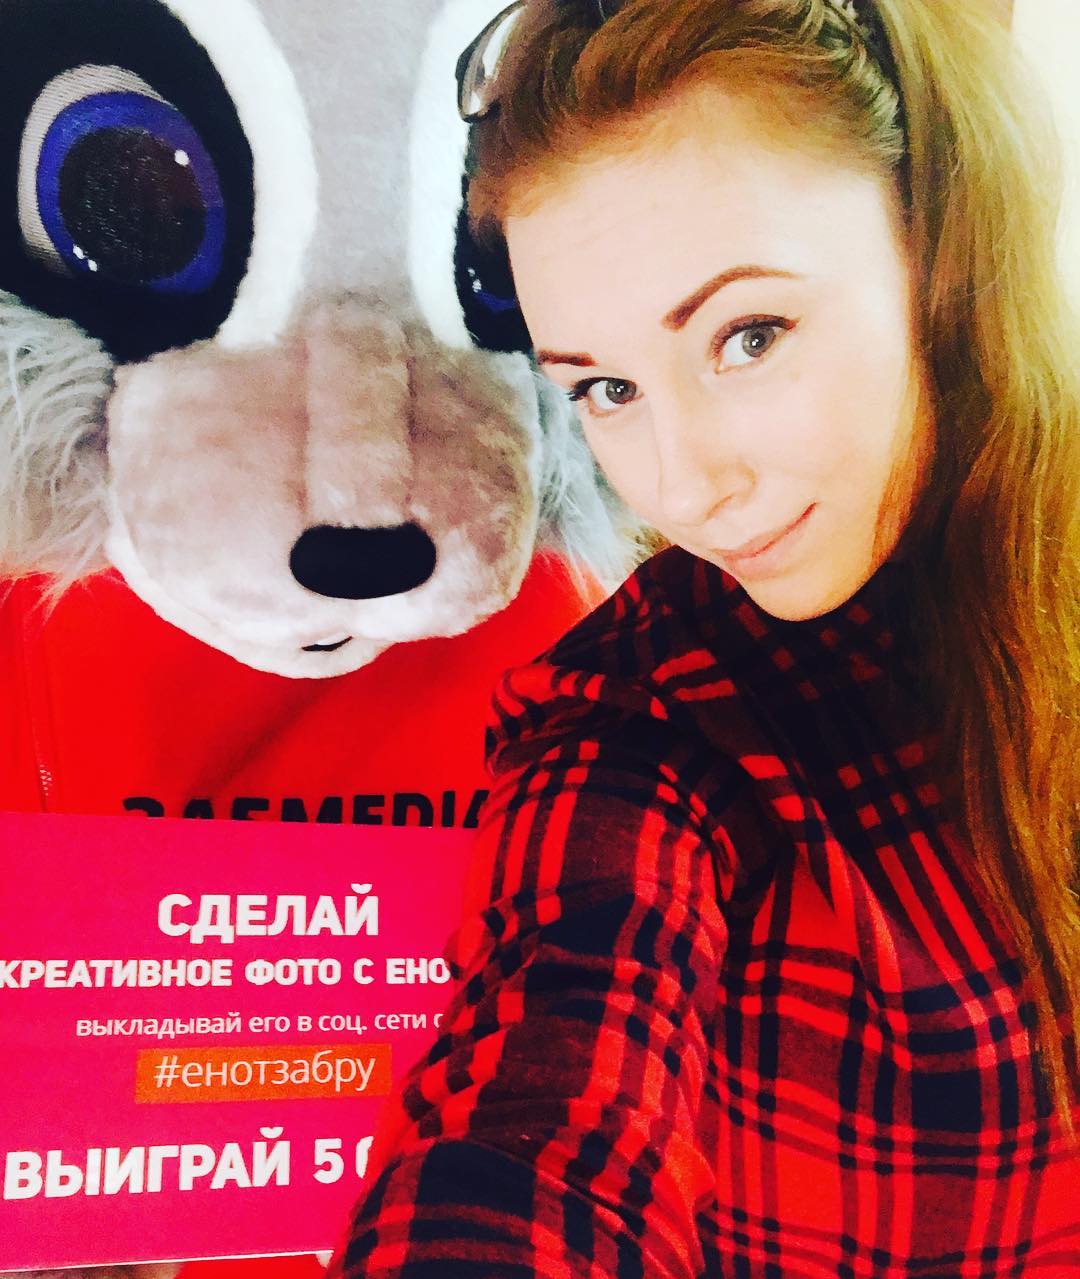 Енот подарил 5000 рублей победительнице фотоконкурса от Zab.ru